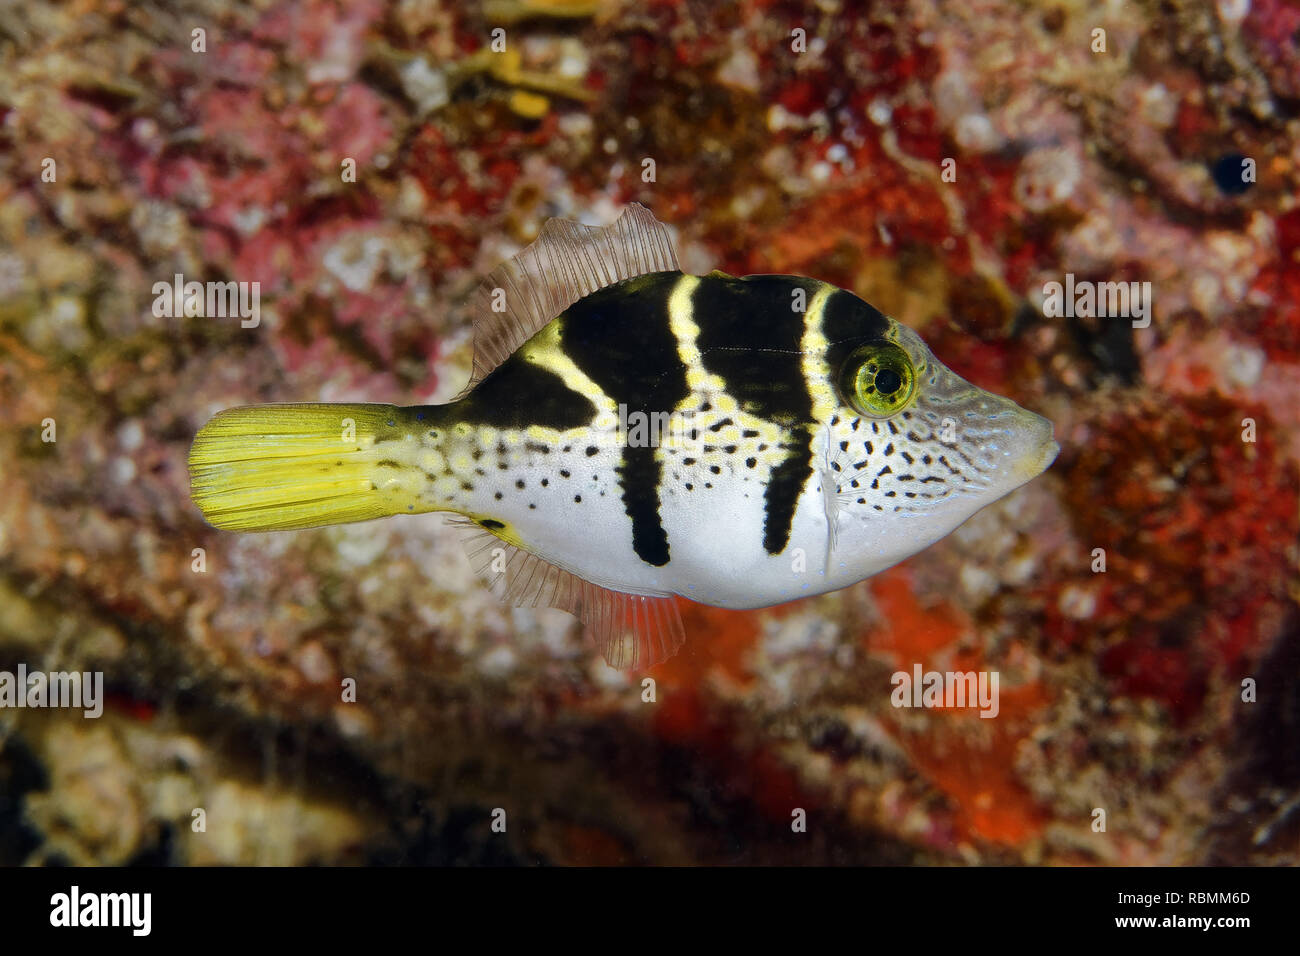 Filefish Blacksaddle/Mimic filefish - Paraluteres prionurus Stockfoto